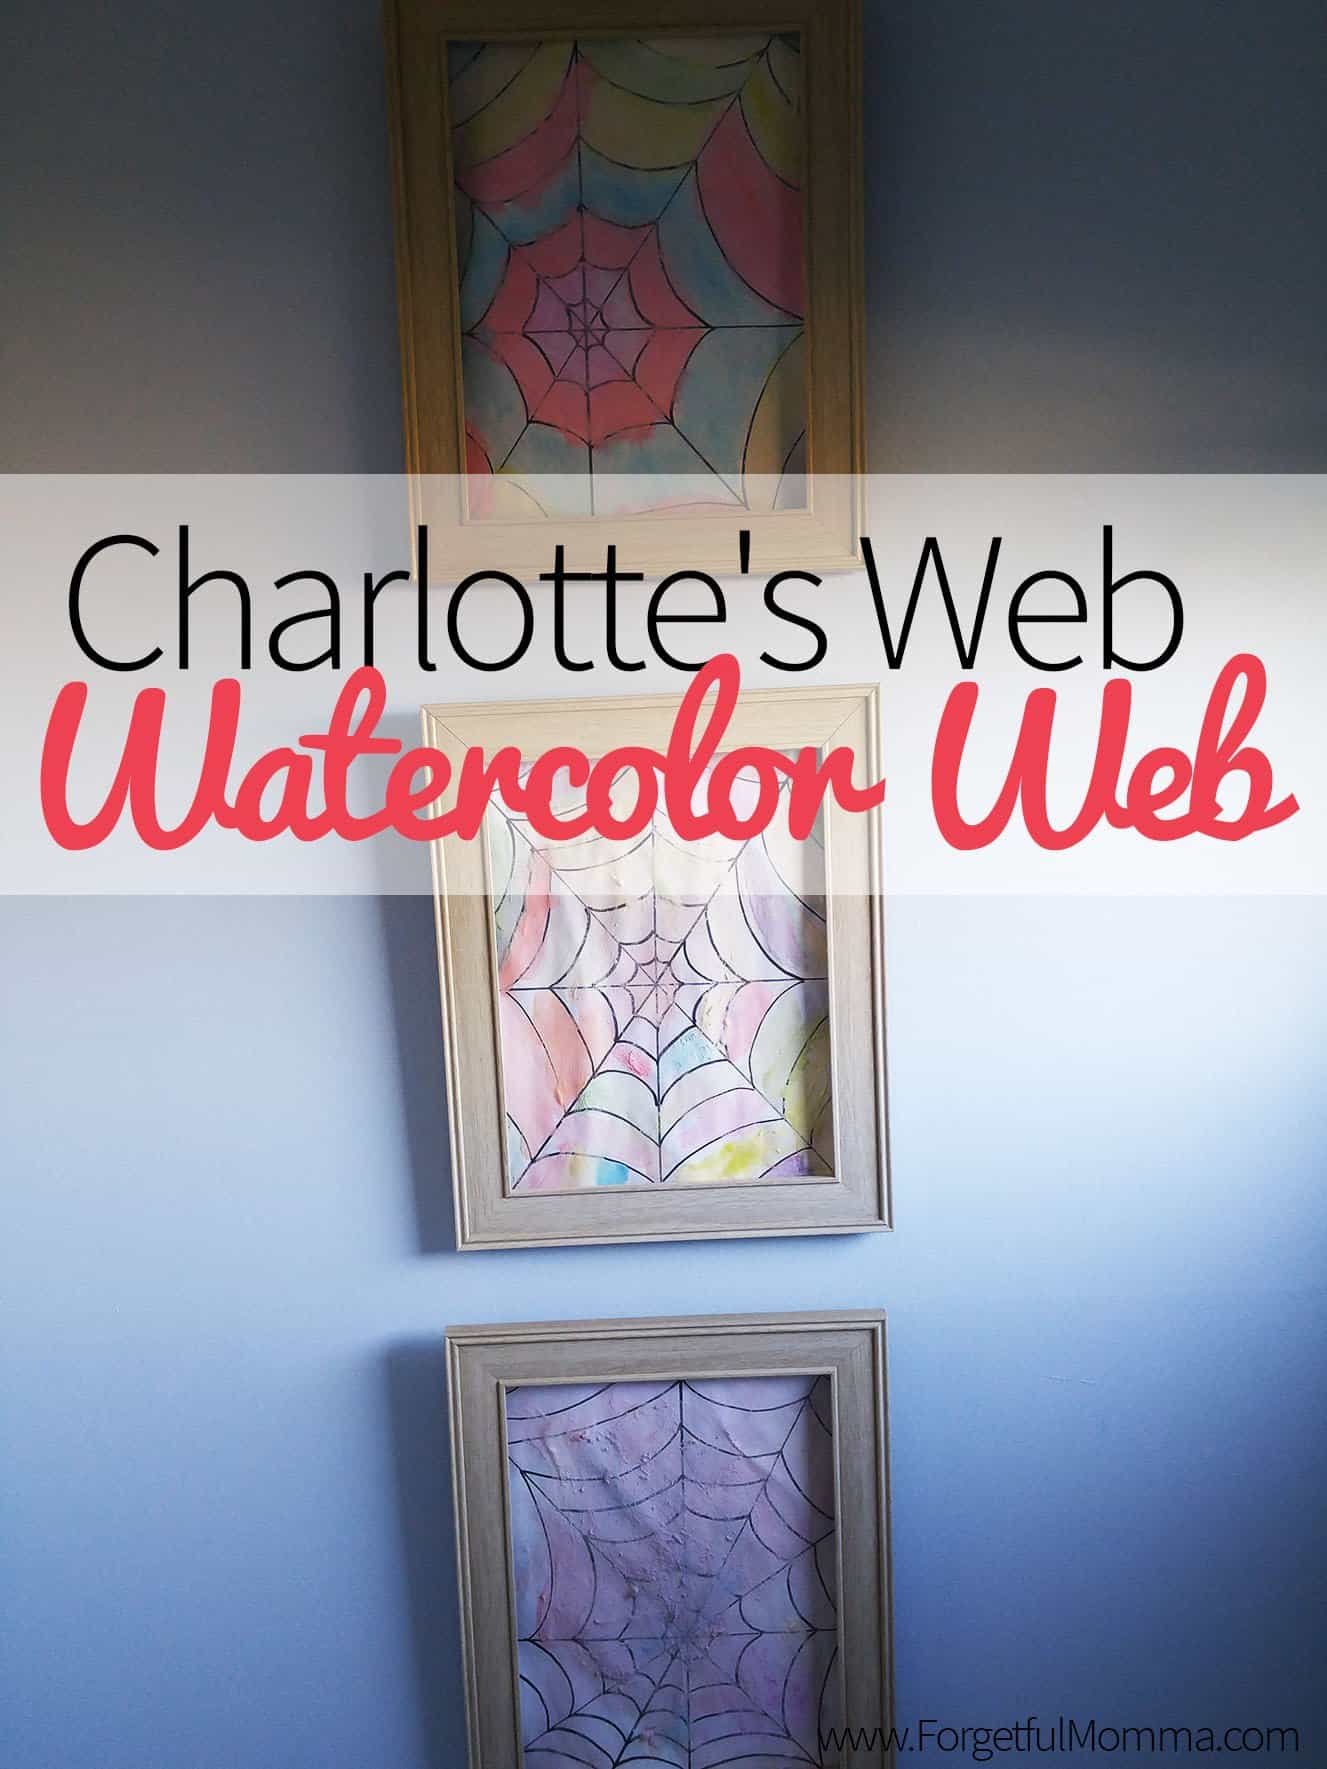 Charlotte's Web - Watercolor Web